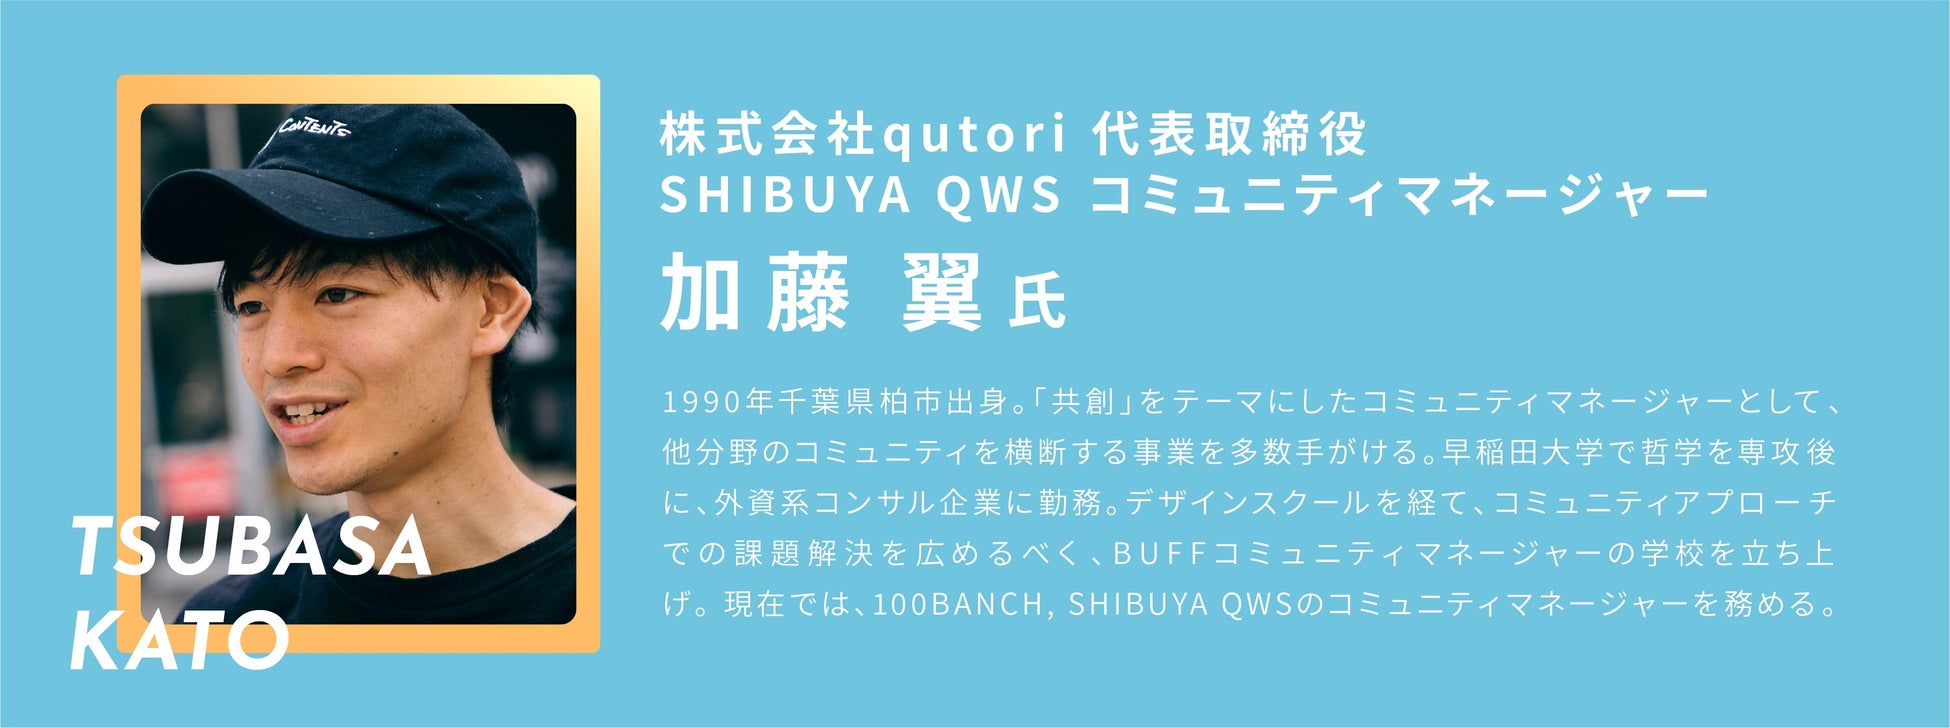 「COMMUNITY MANAGER'S SUMMIT Vol.3」へqutori代表 加藤が登壇のサブ画像5